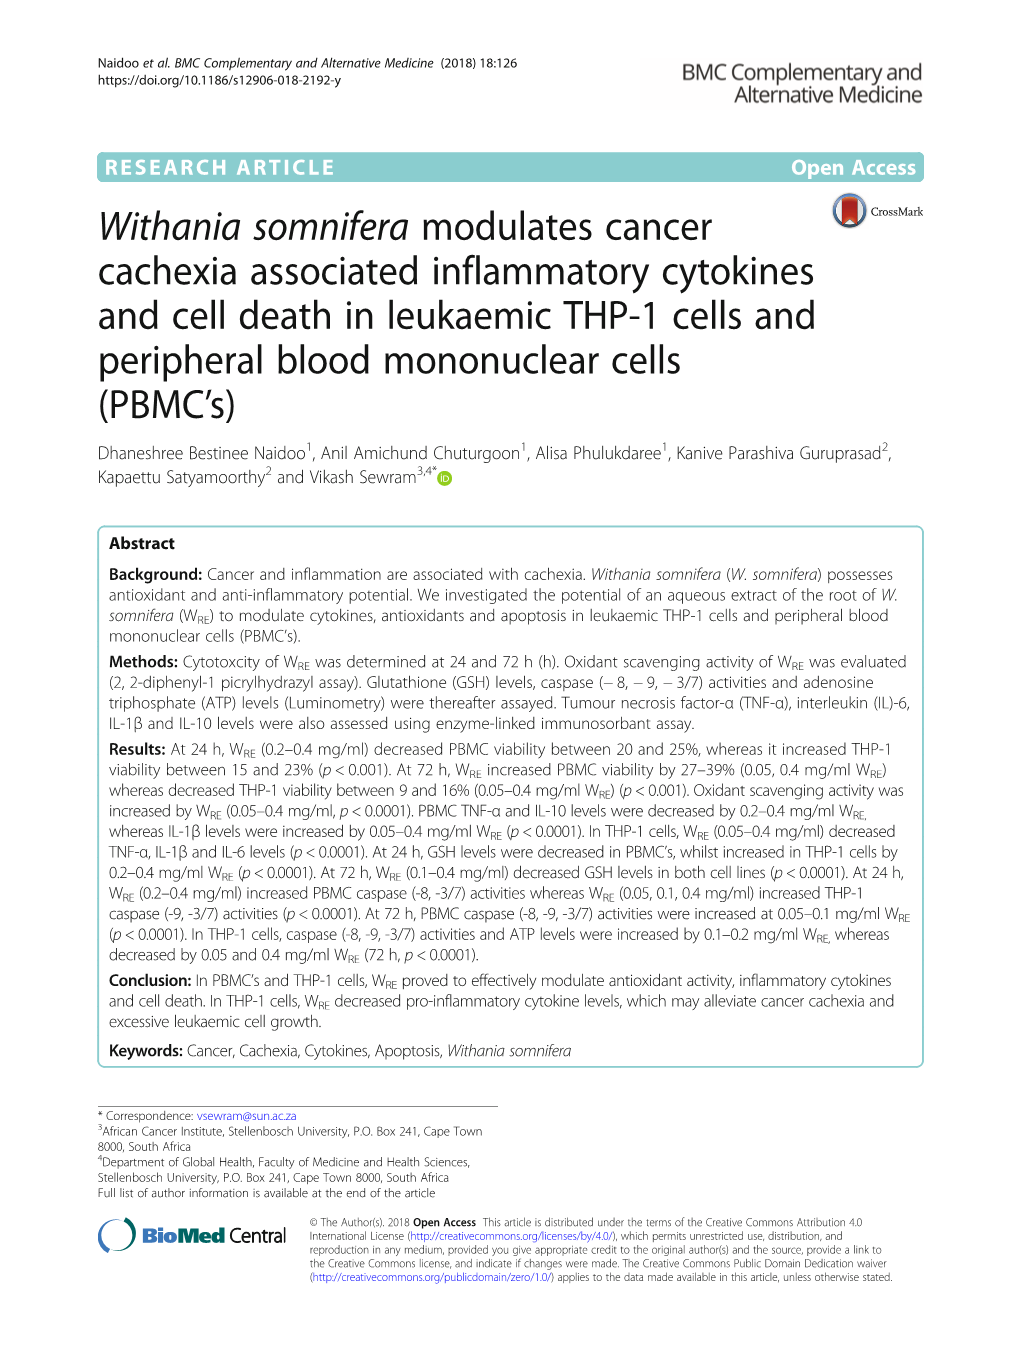 Withania Somnifera Modulates Cancer Cachexia Associated Inflammatory